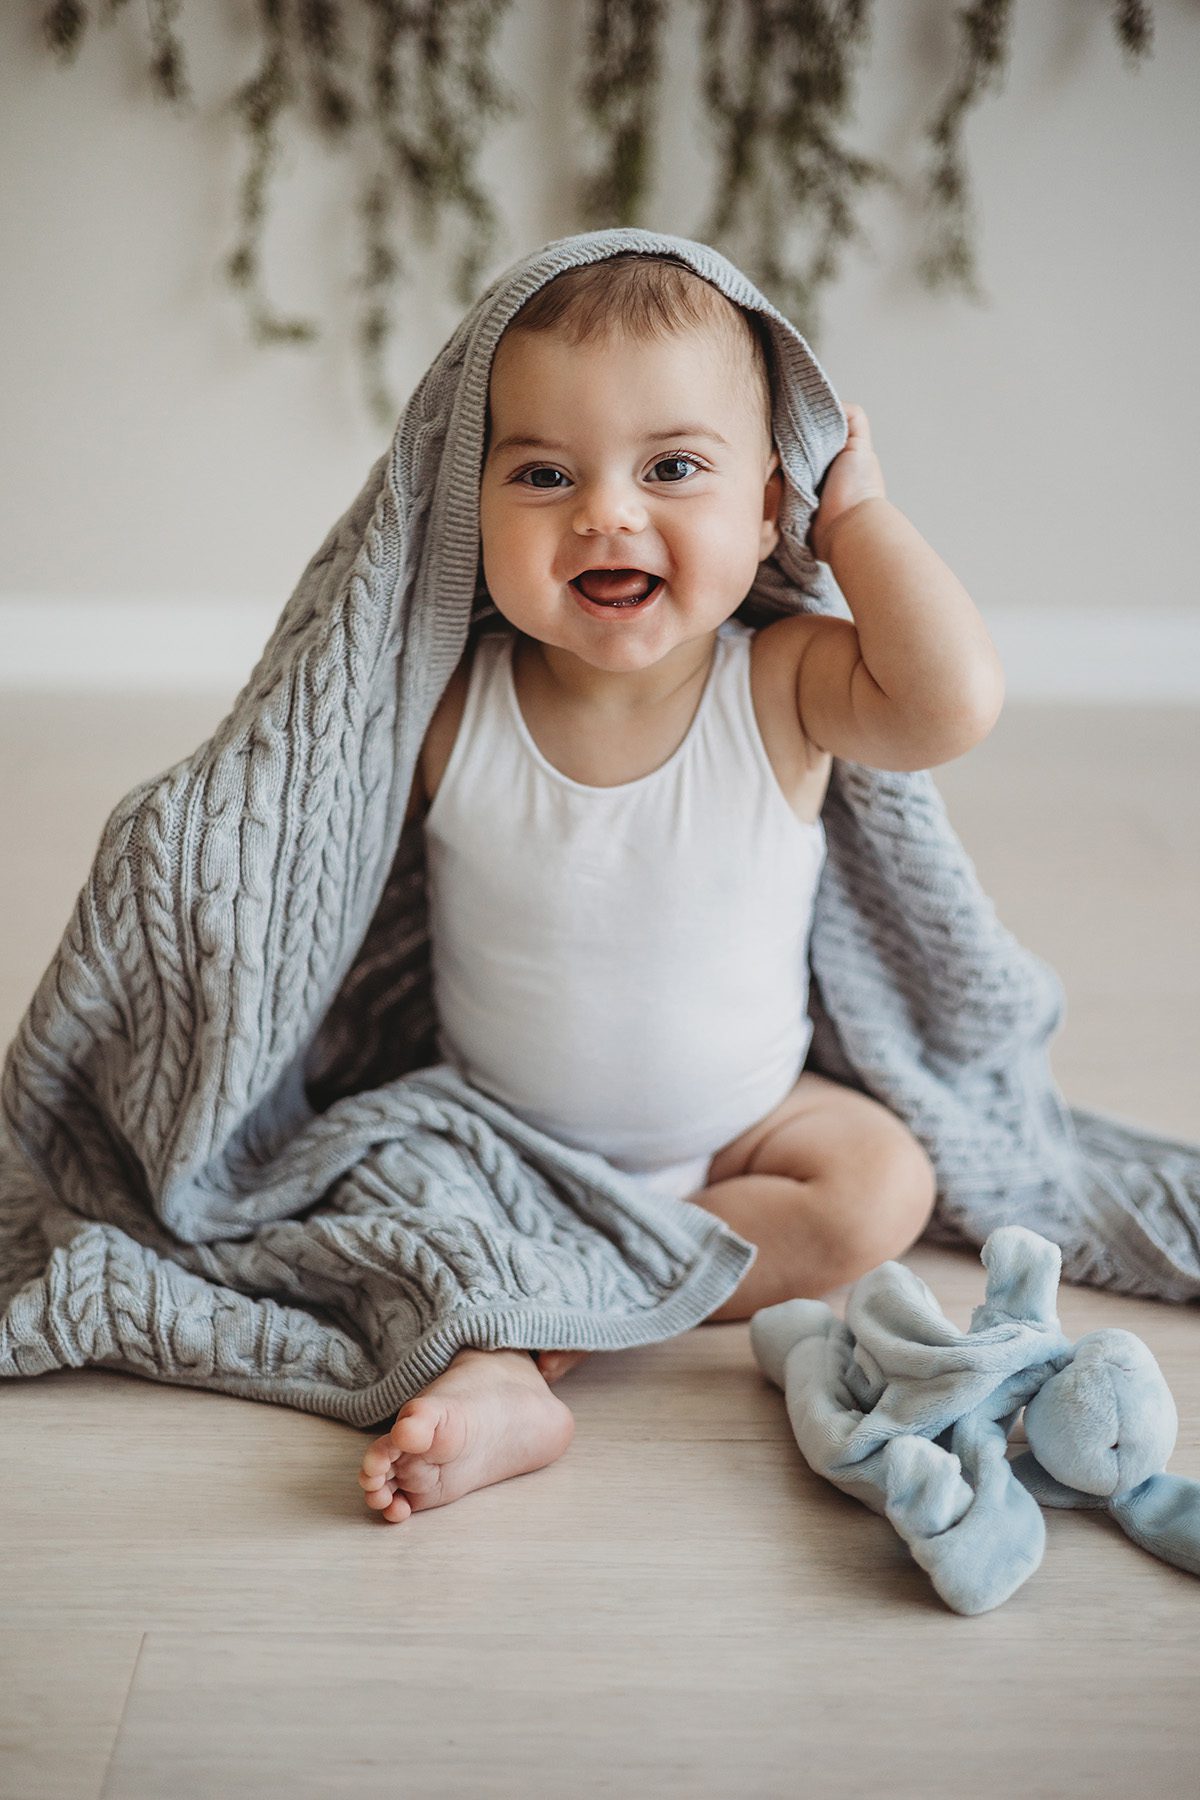 A baby smiles as he plays peekaboo under a grey blanket